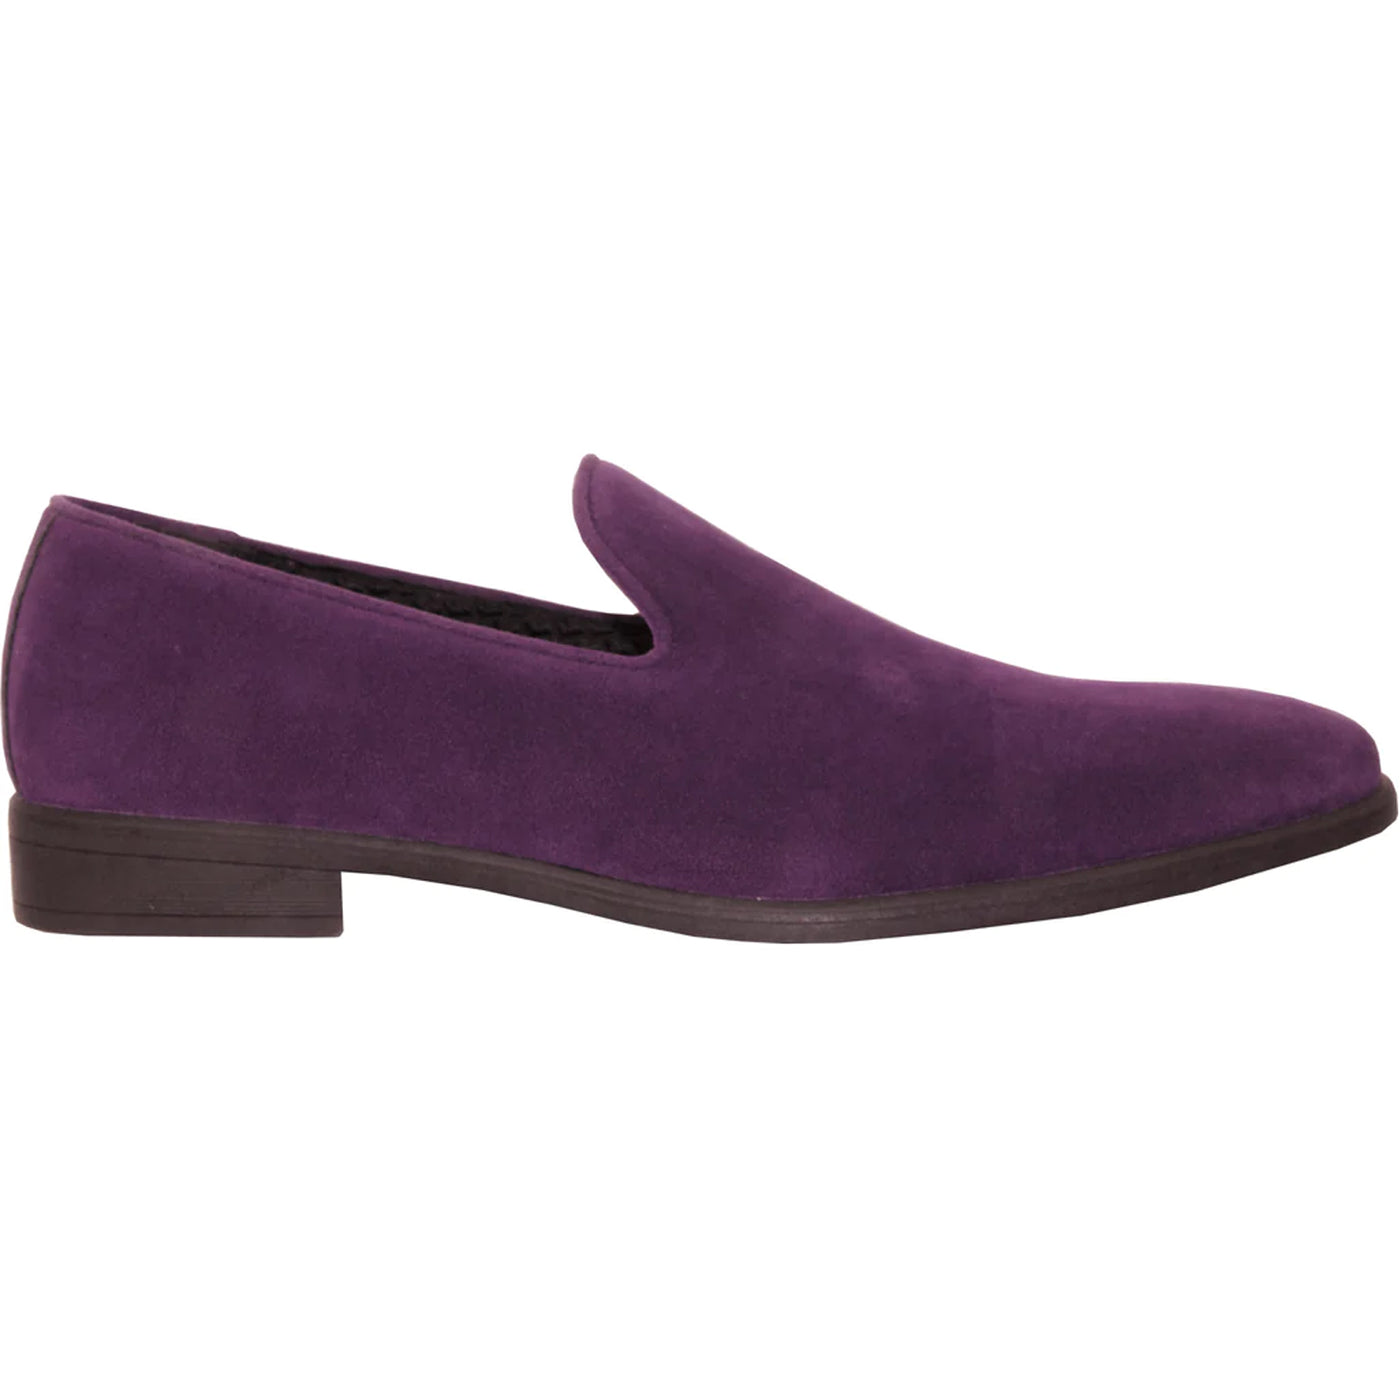 Mens Vegan Suede Wedding & Prom Slip On Loafer Dress Shoe in Purple